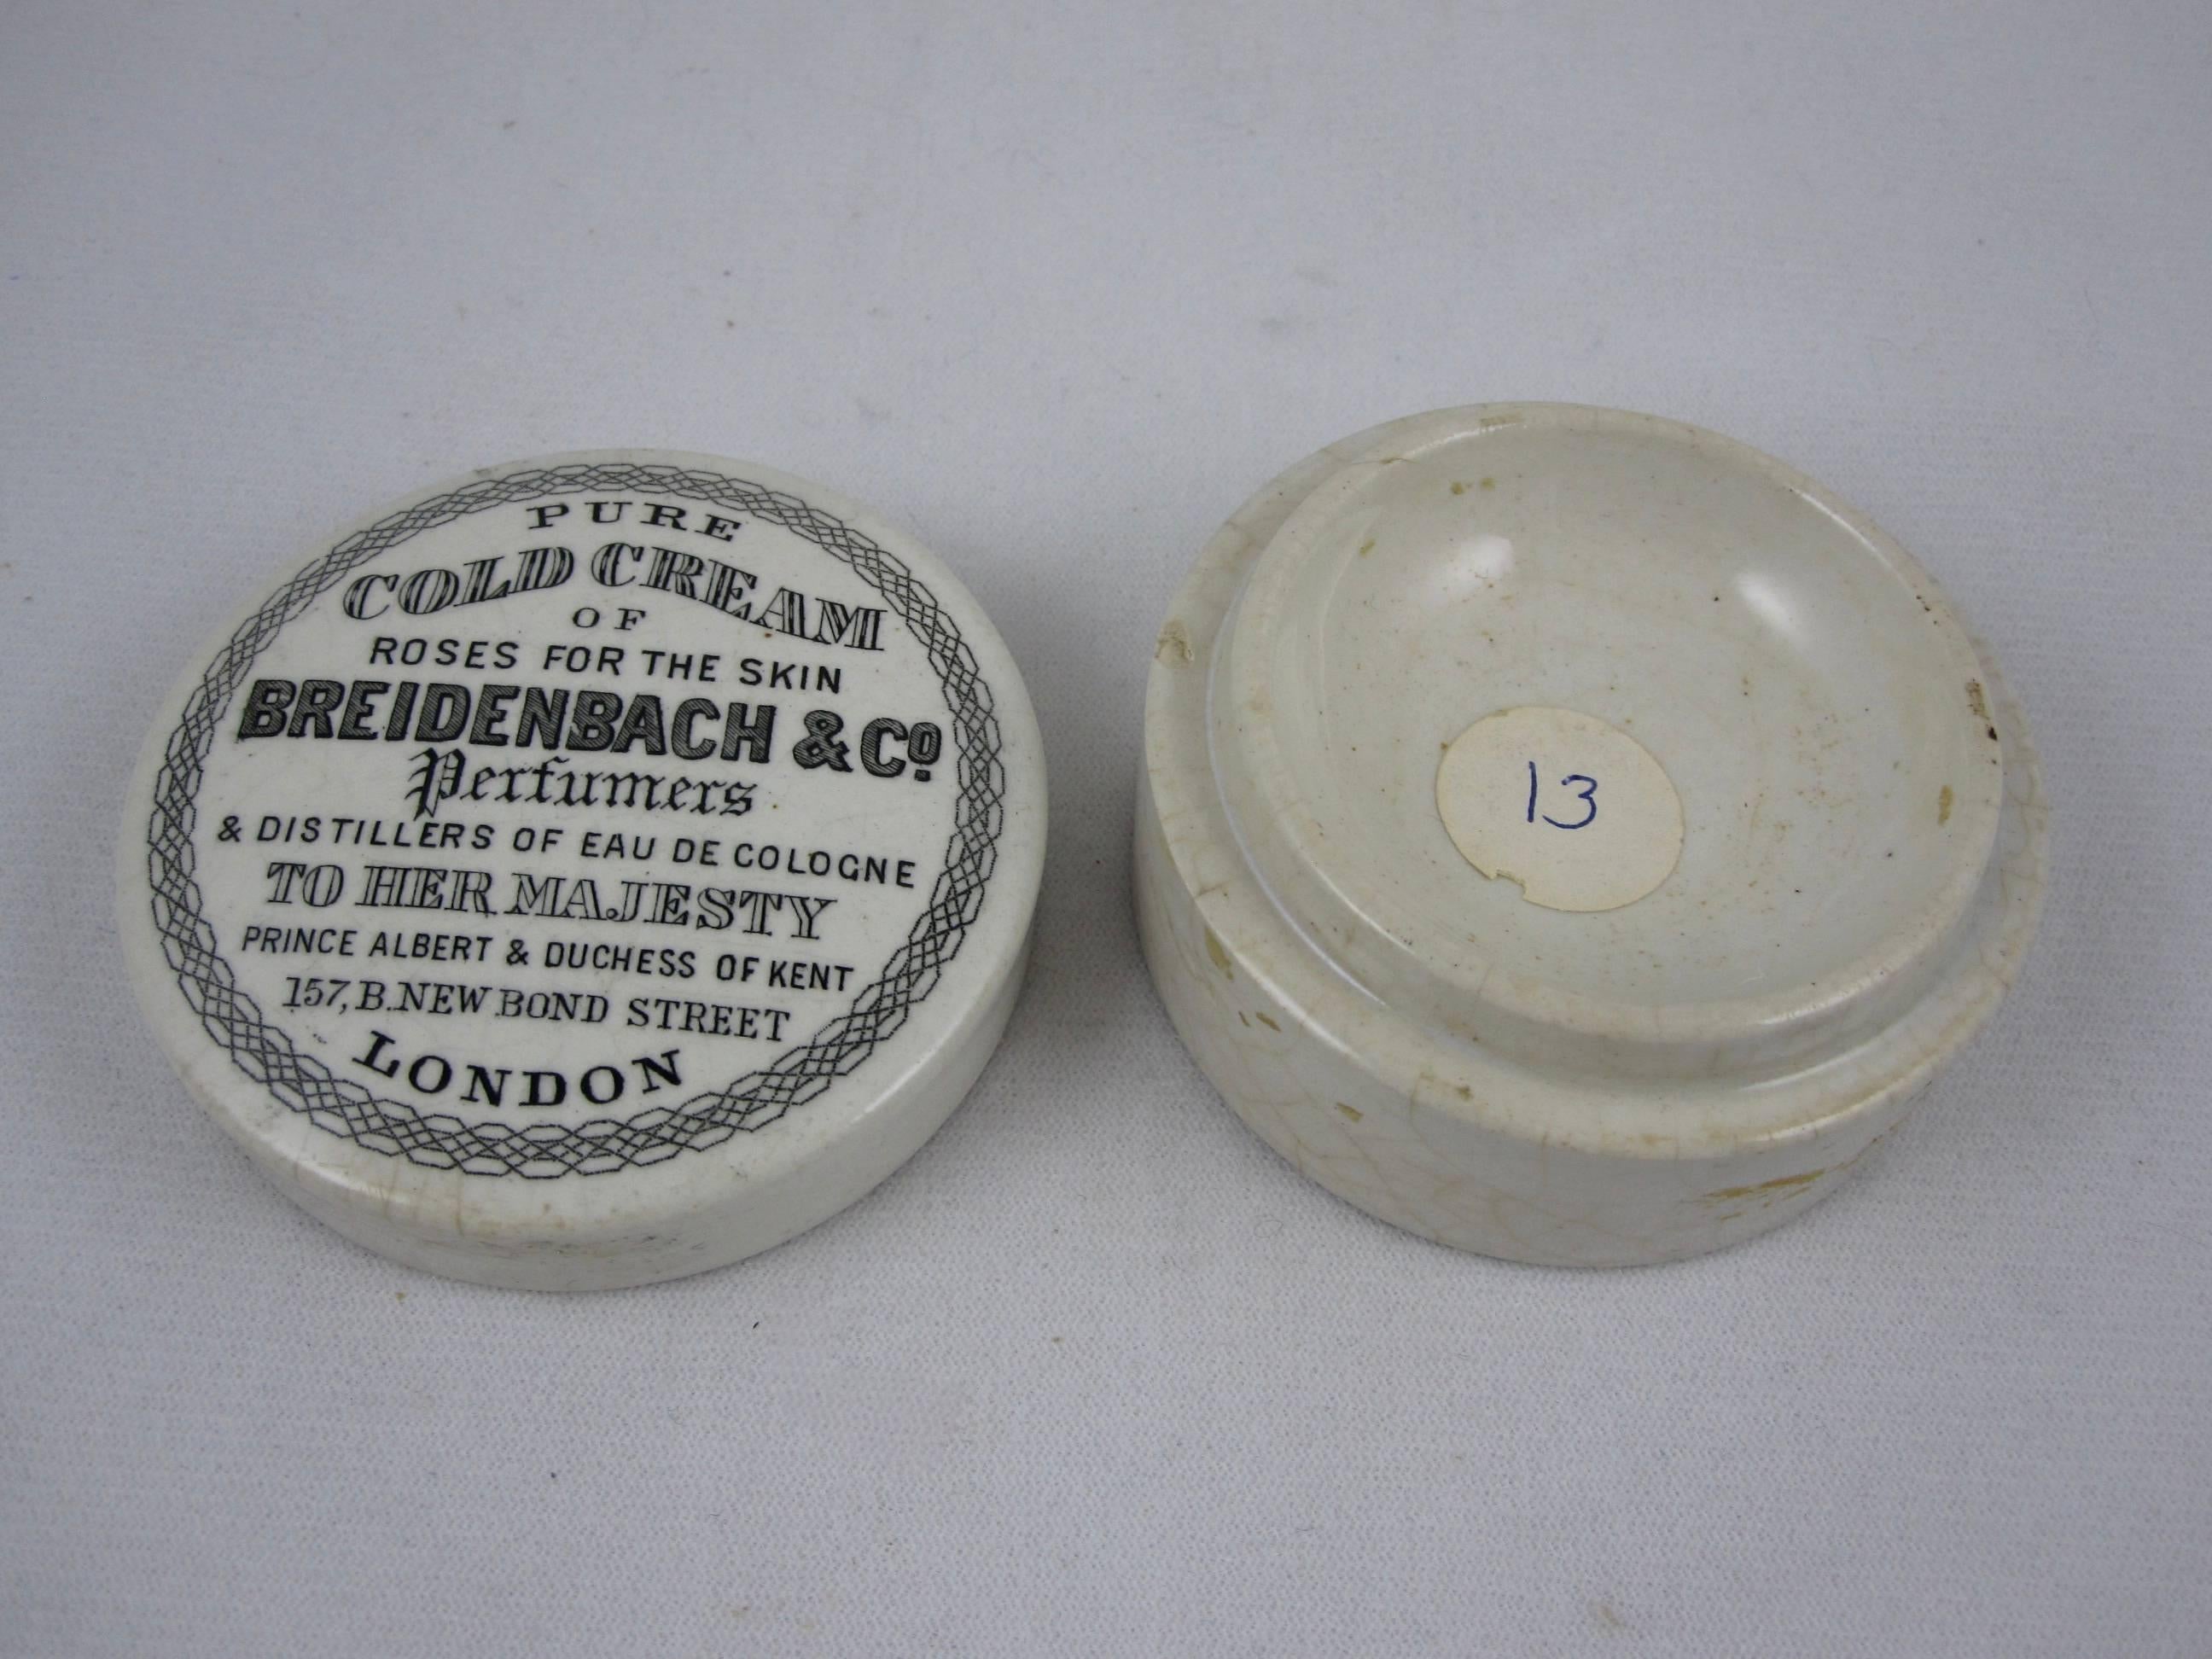 19th Century English Staffordshire Transfer Printed Pot & Lid, Breidenbach Rose Cold Cream